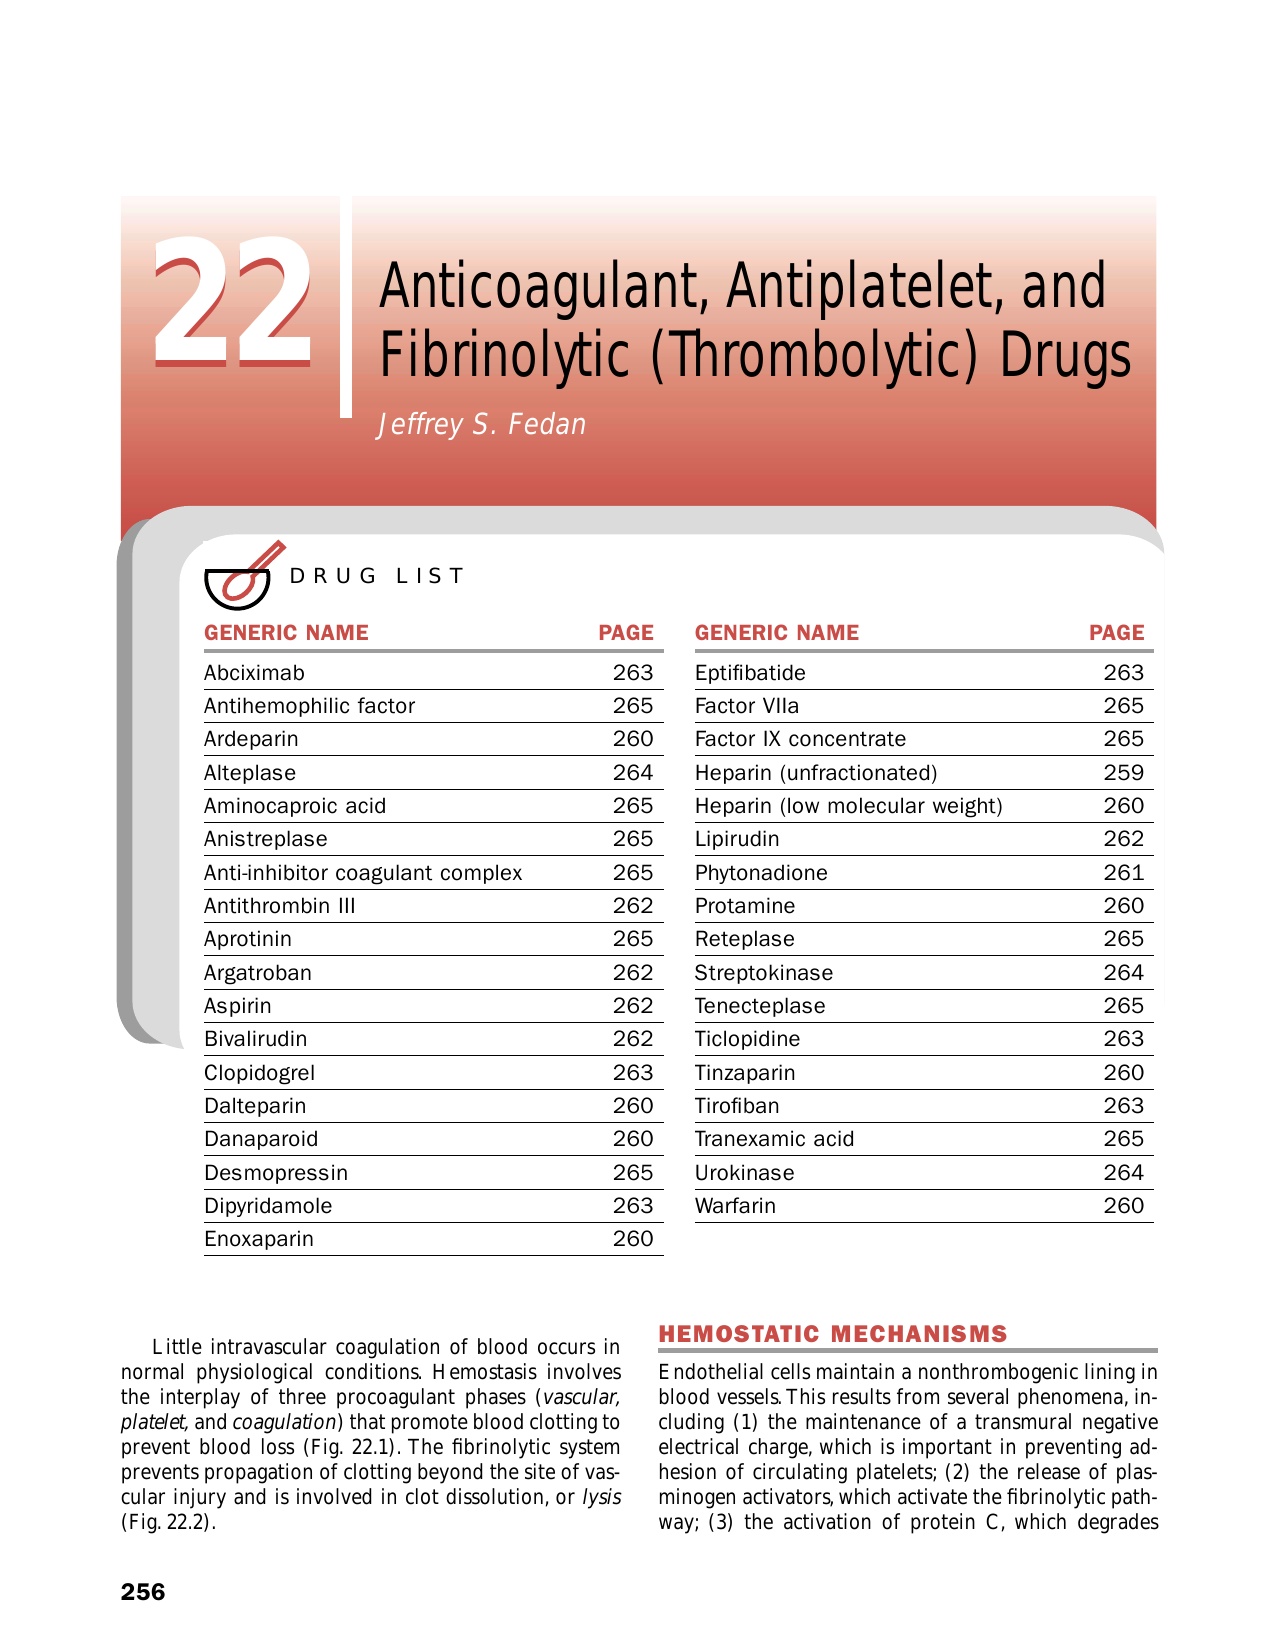 Anticoagulant drug names